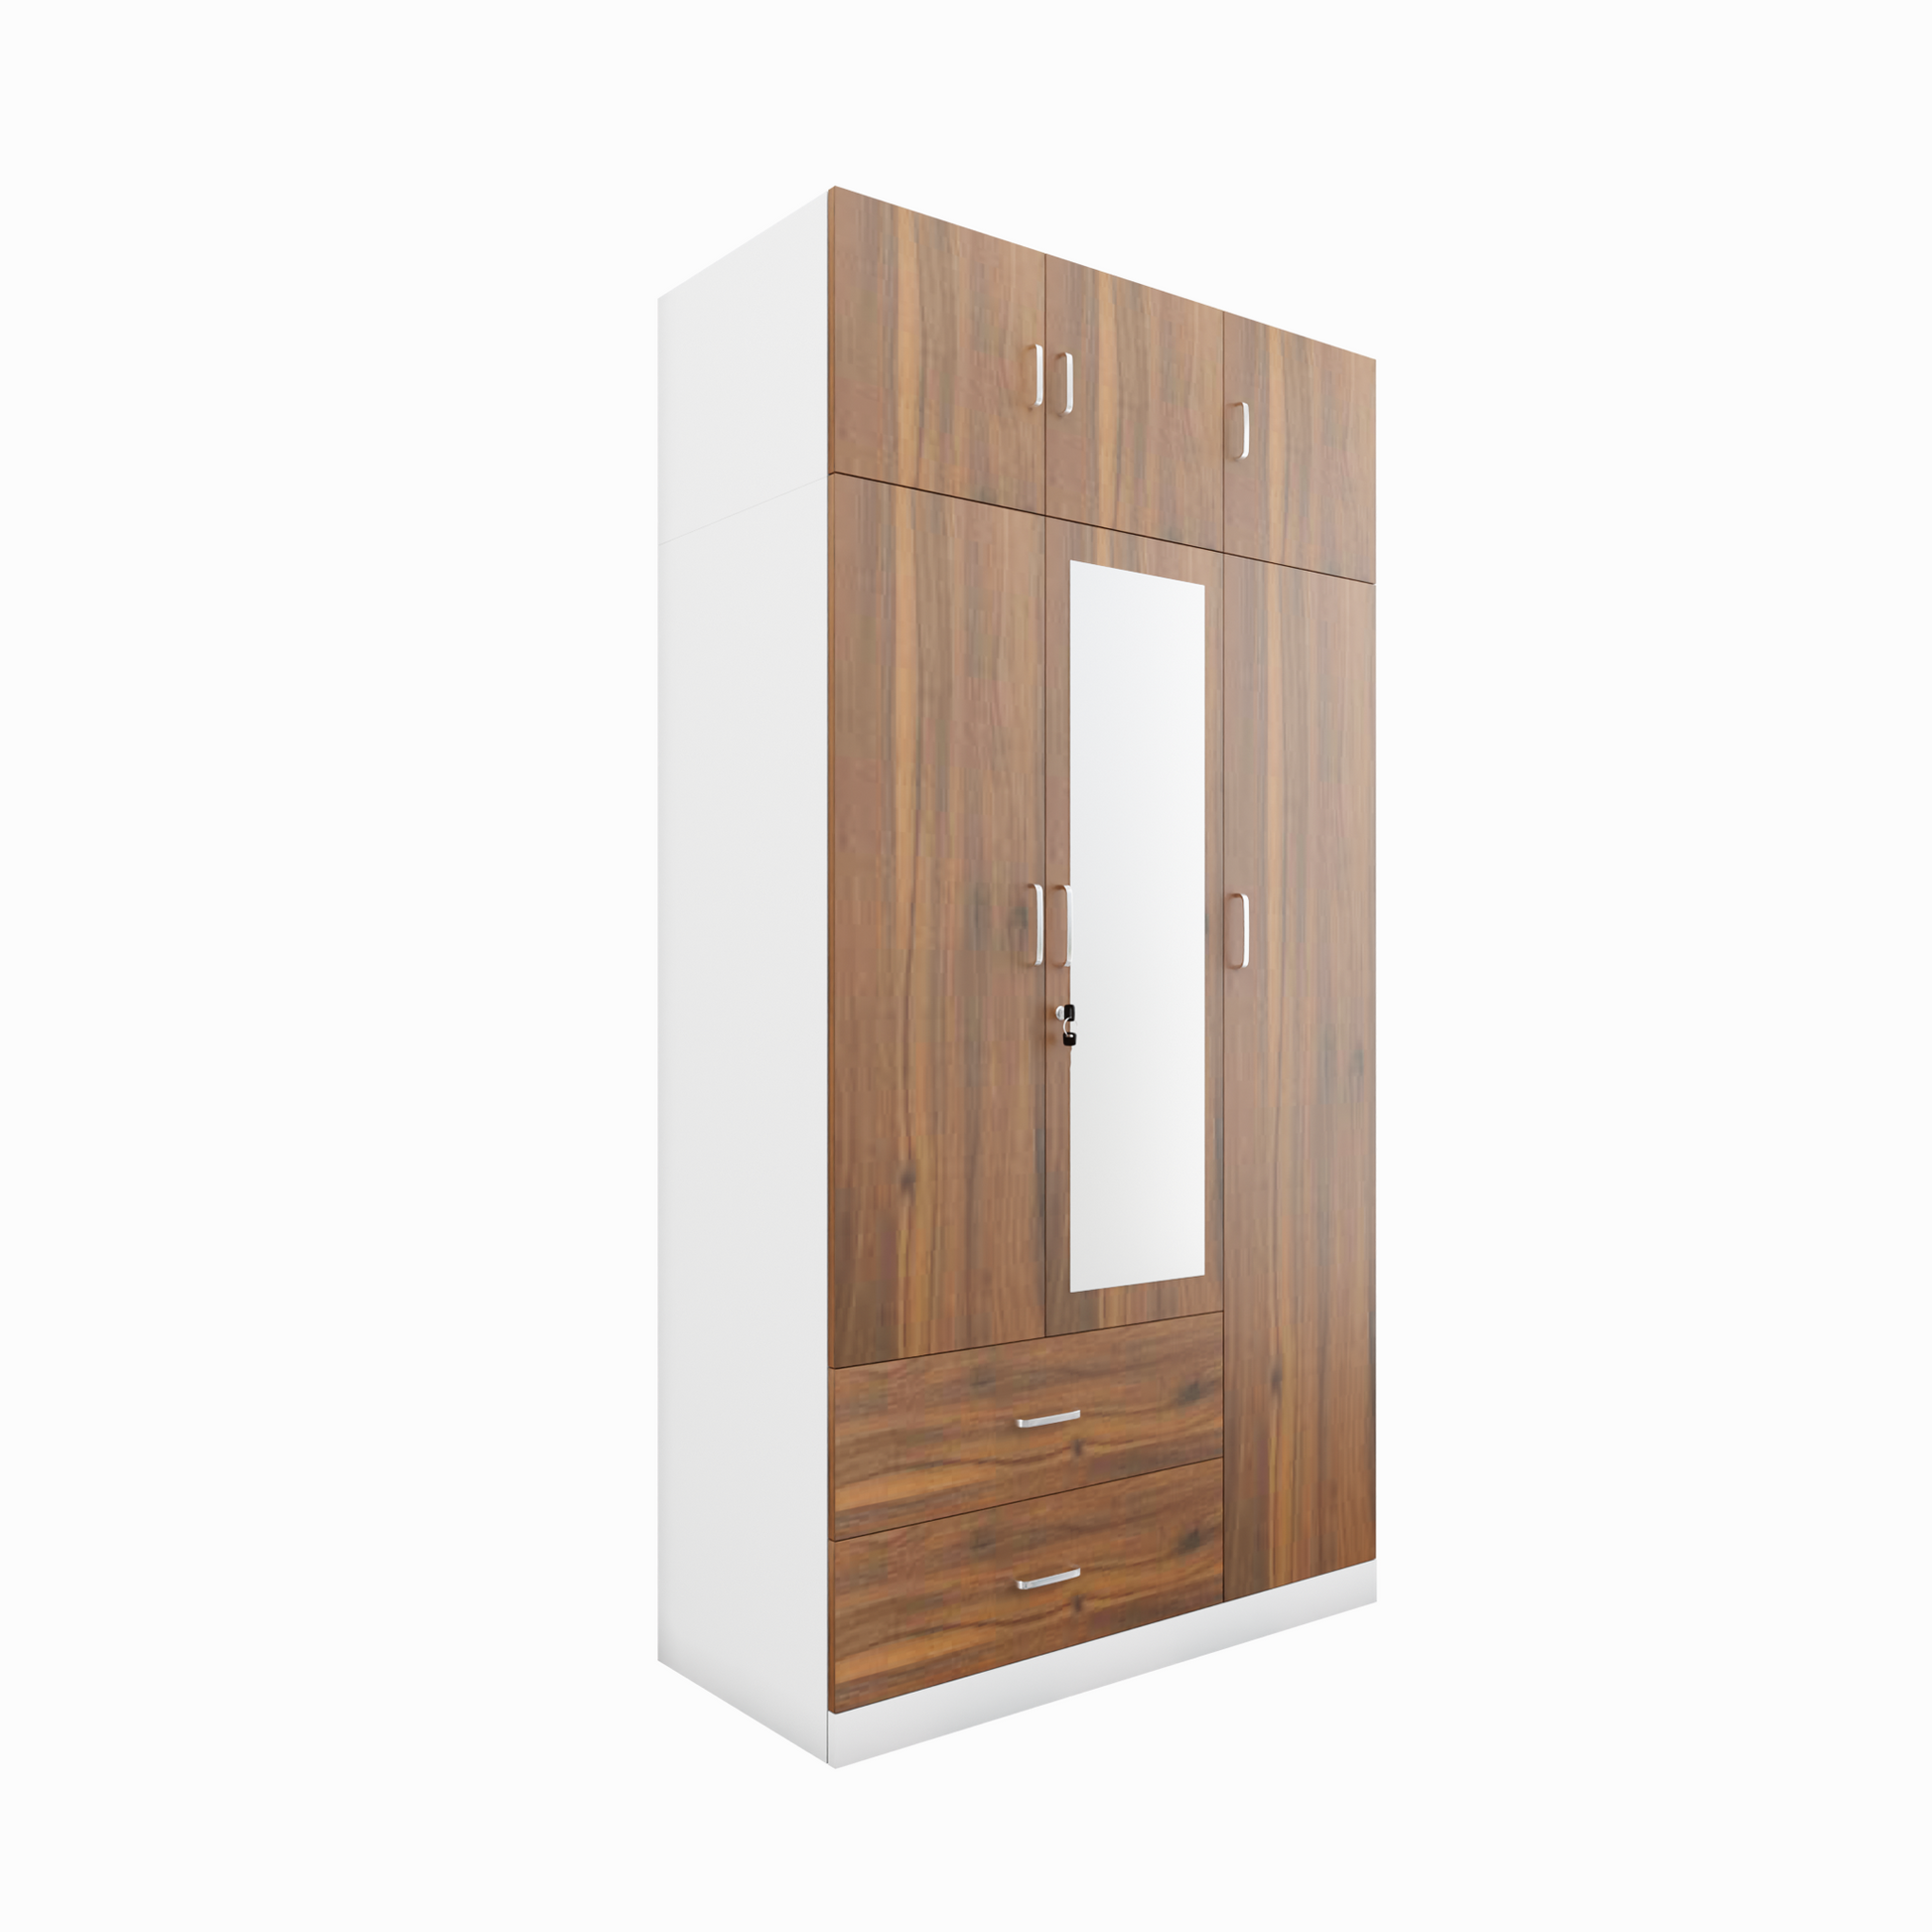 AVIRA |Wardrobe with Mirror, Hinged | 3 Door, 2 Drawer with loft & Dual Color Wardrobes VIKI FURNITURE   